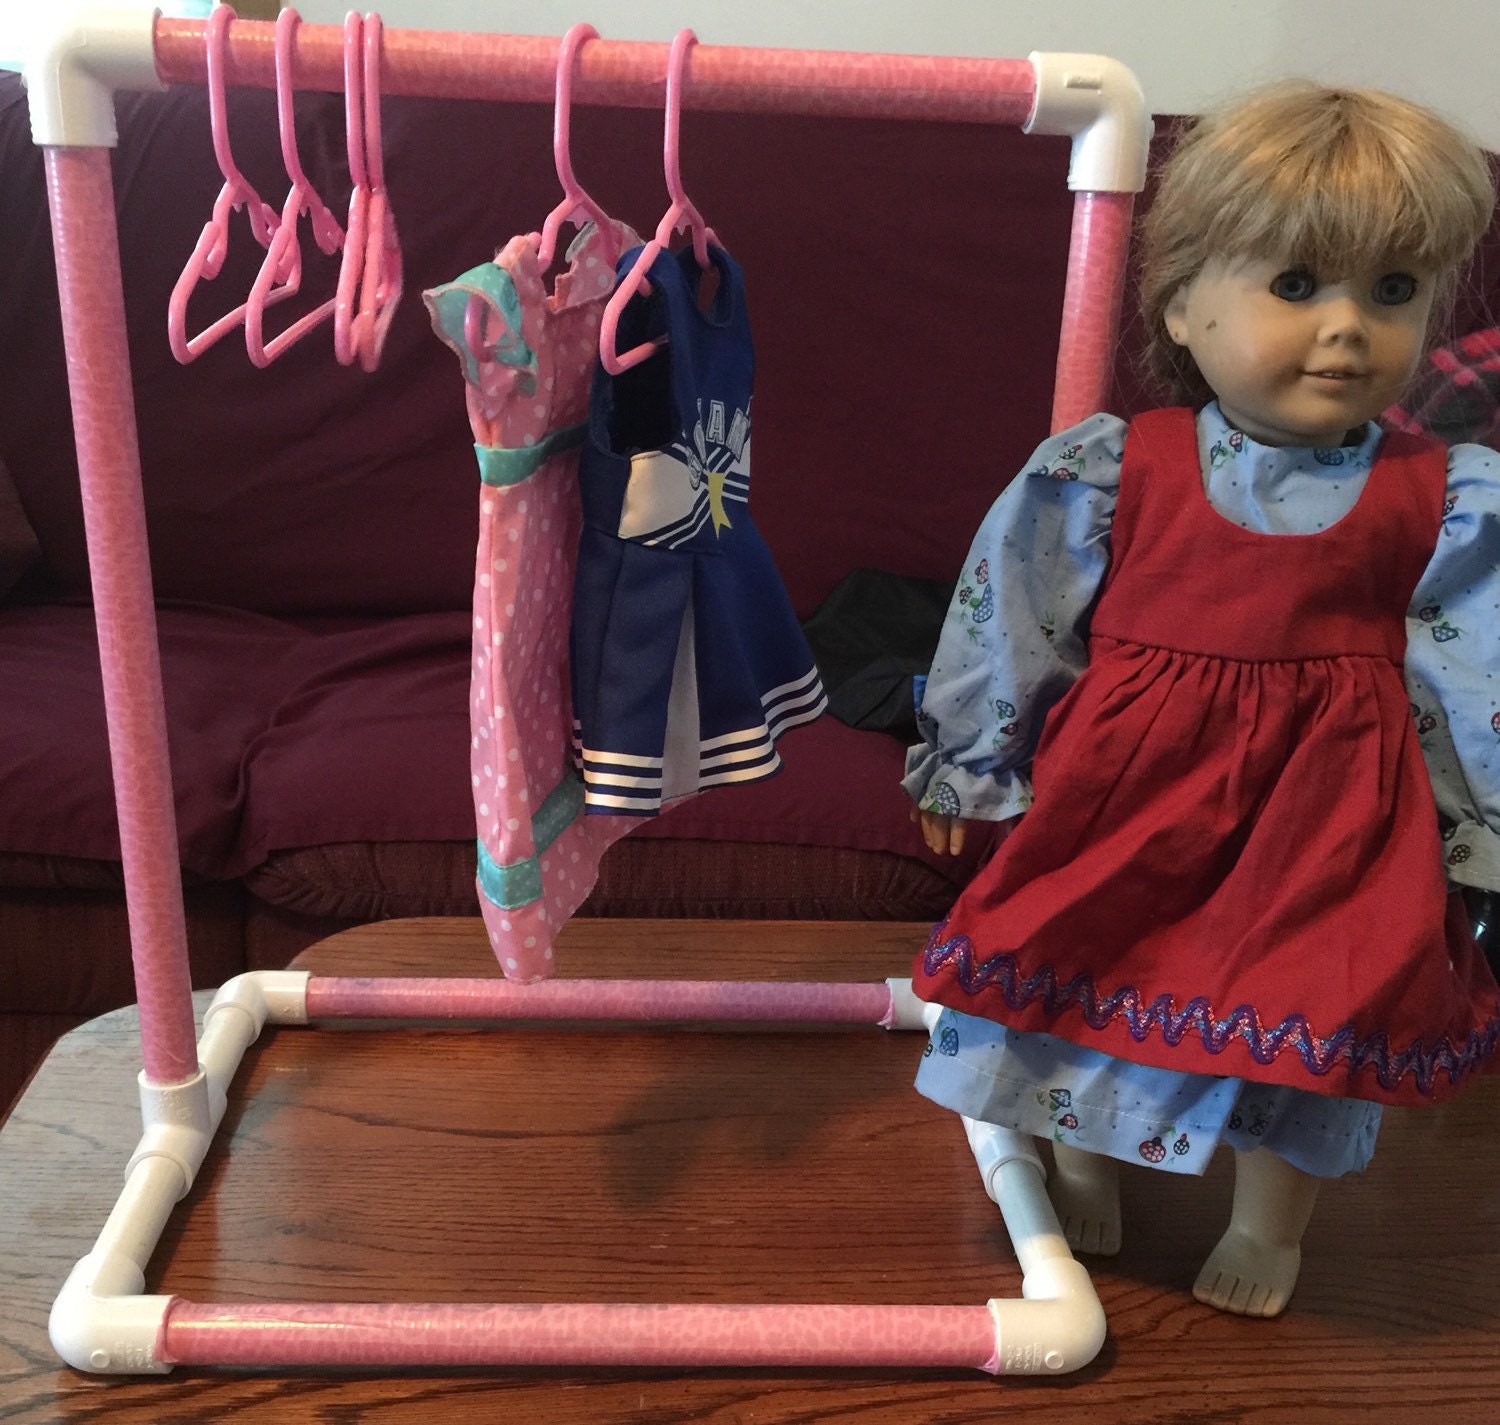 Wooden Doll Clothes Hangers - Clip Clop Toys